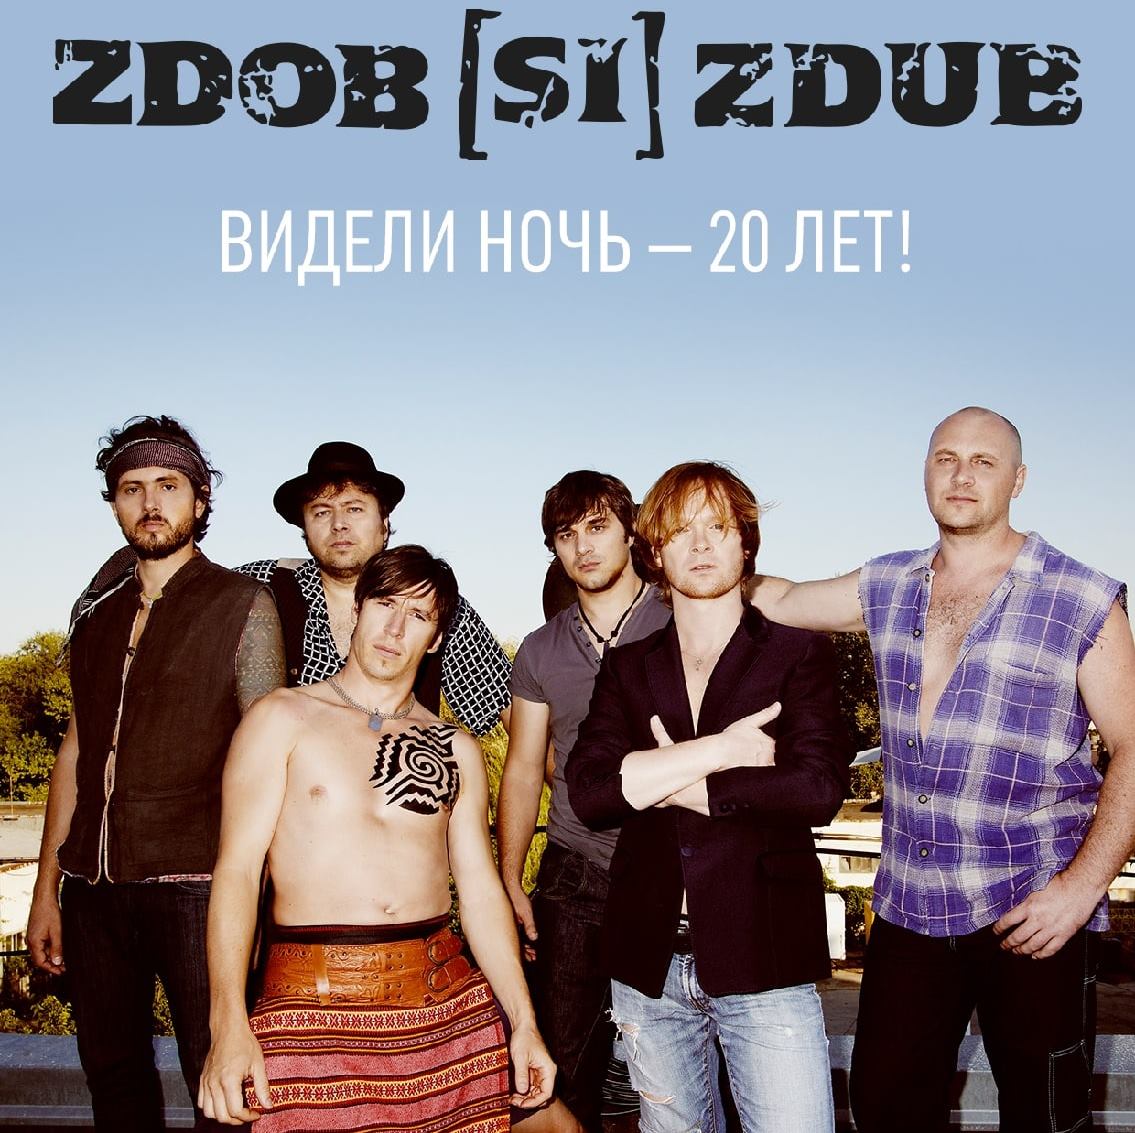 Zdob si Zdub отметили концертом 20-летие кавера на "Видели ночь"